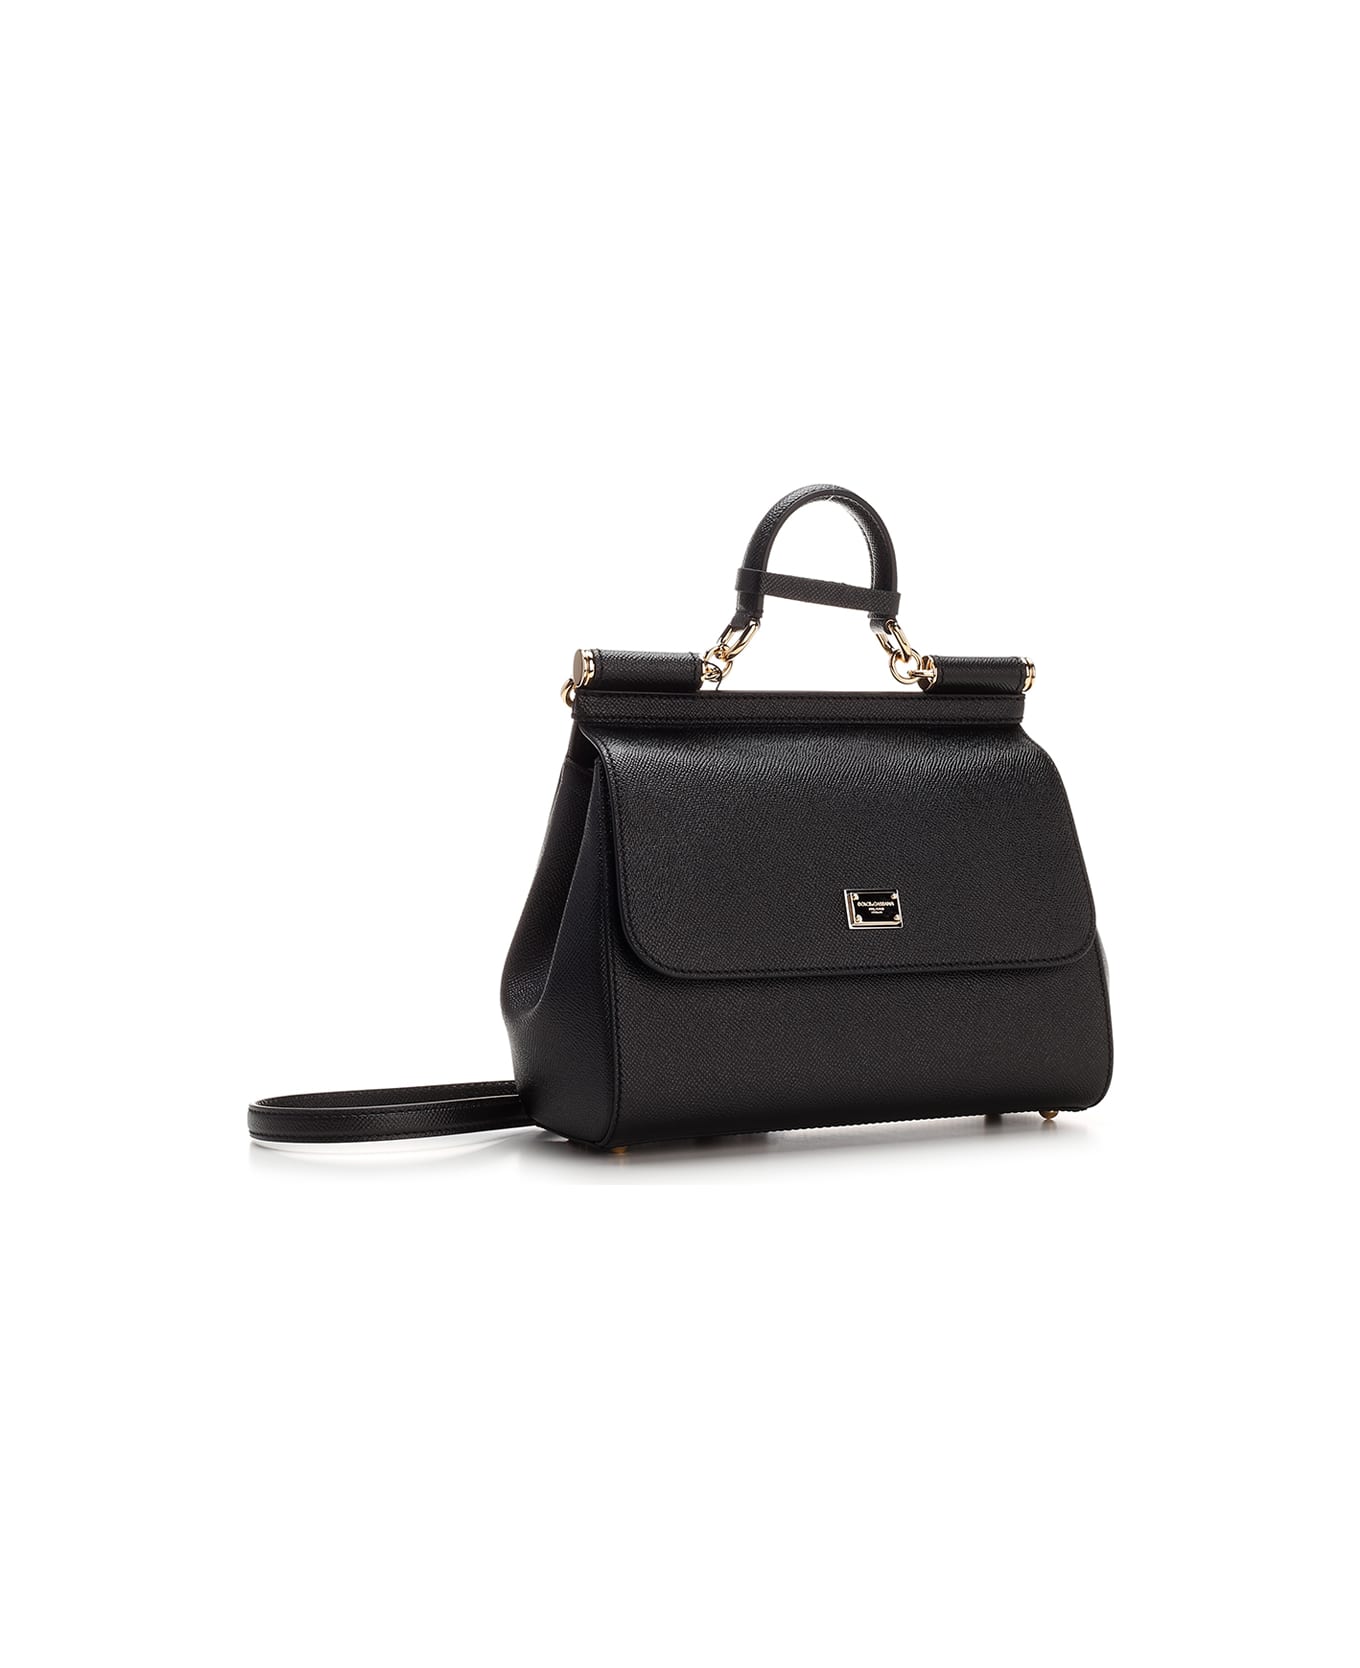 Dolce & Gabbana Medium 'sicily' Handbag - Nero トートバッグ